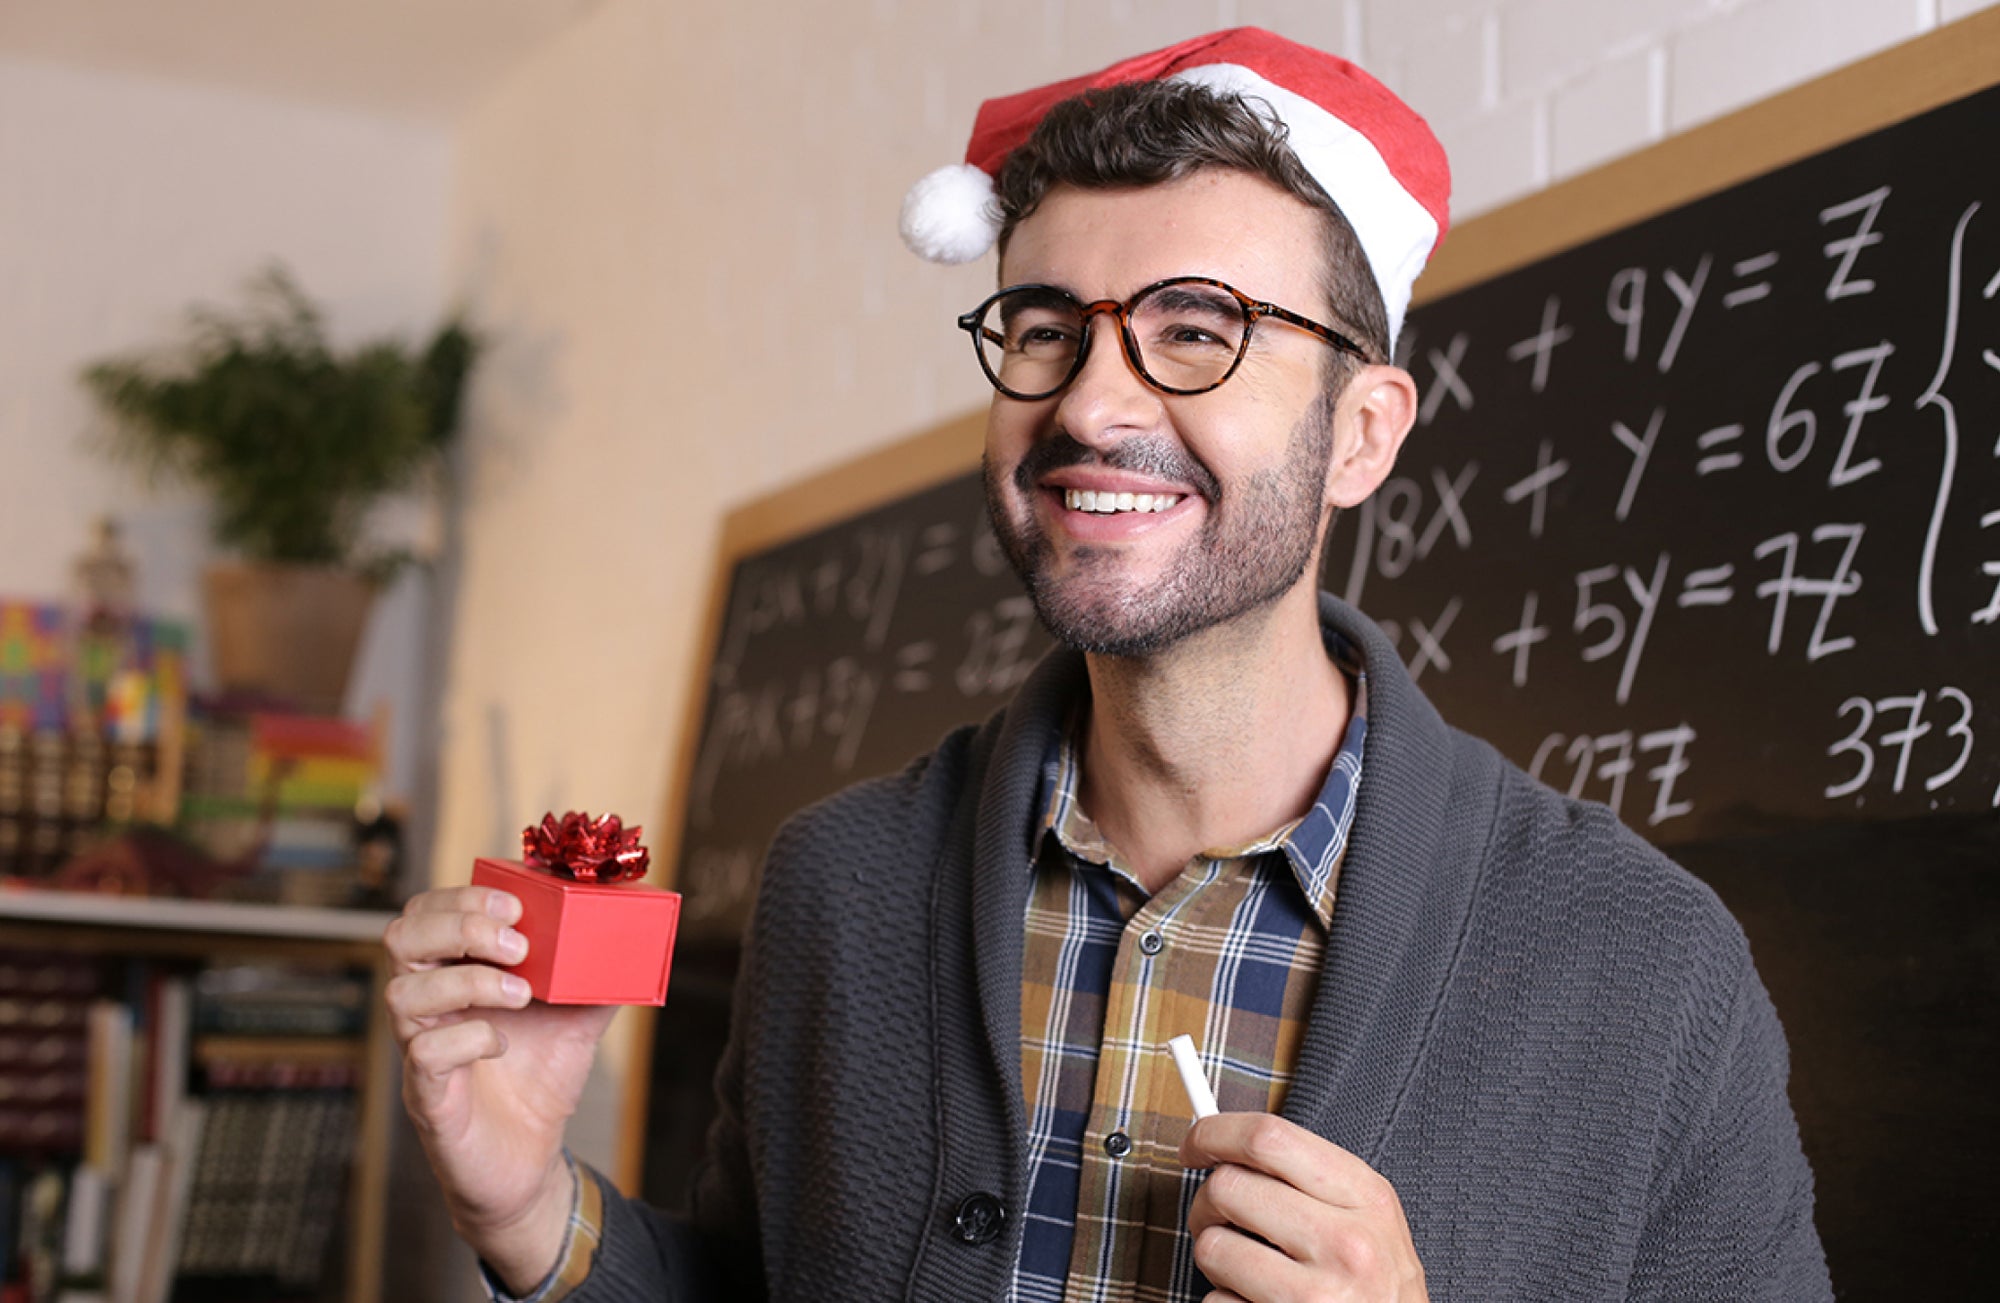 6 Perfect Christmas Gift Ideas for Teachers: Show Your Gratitude!